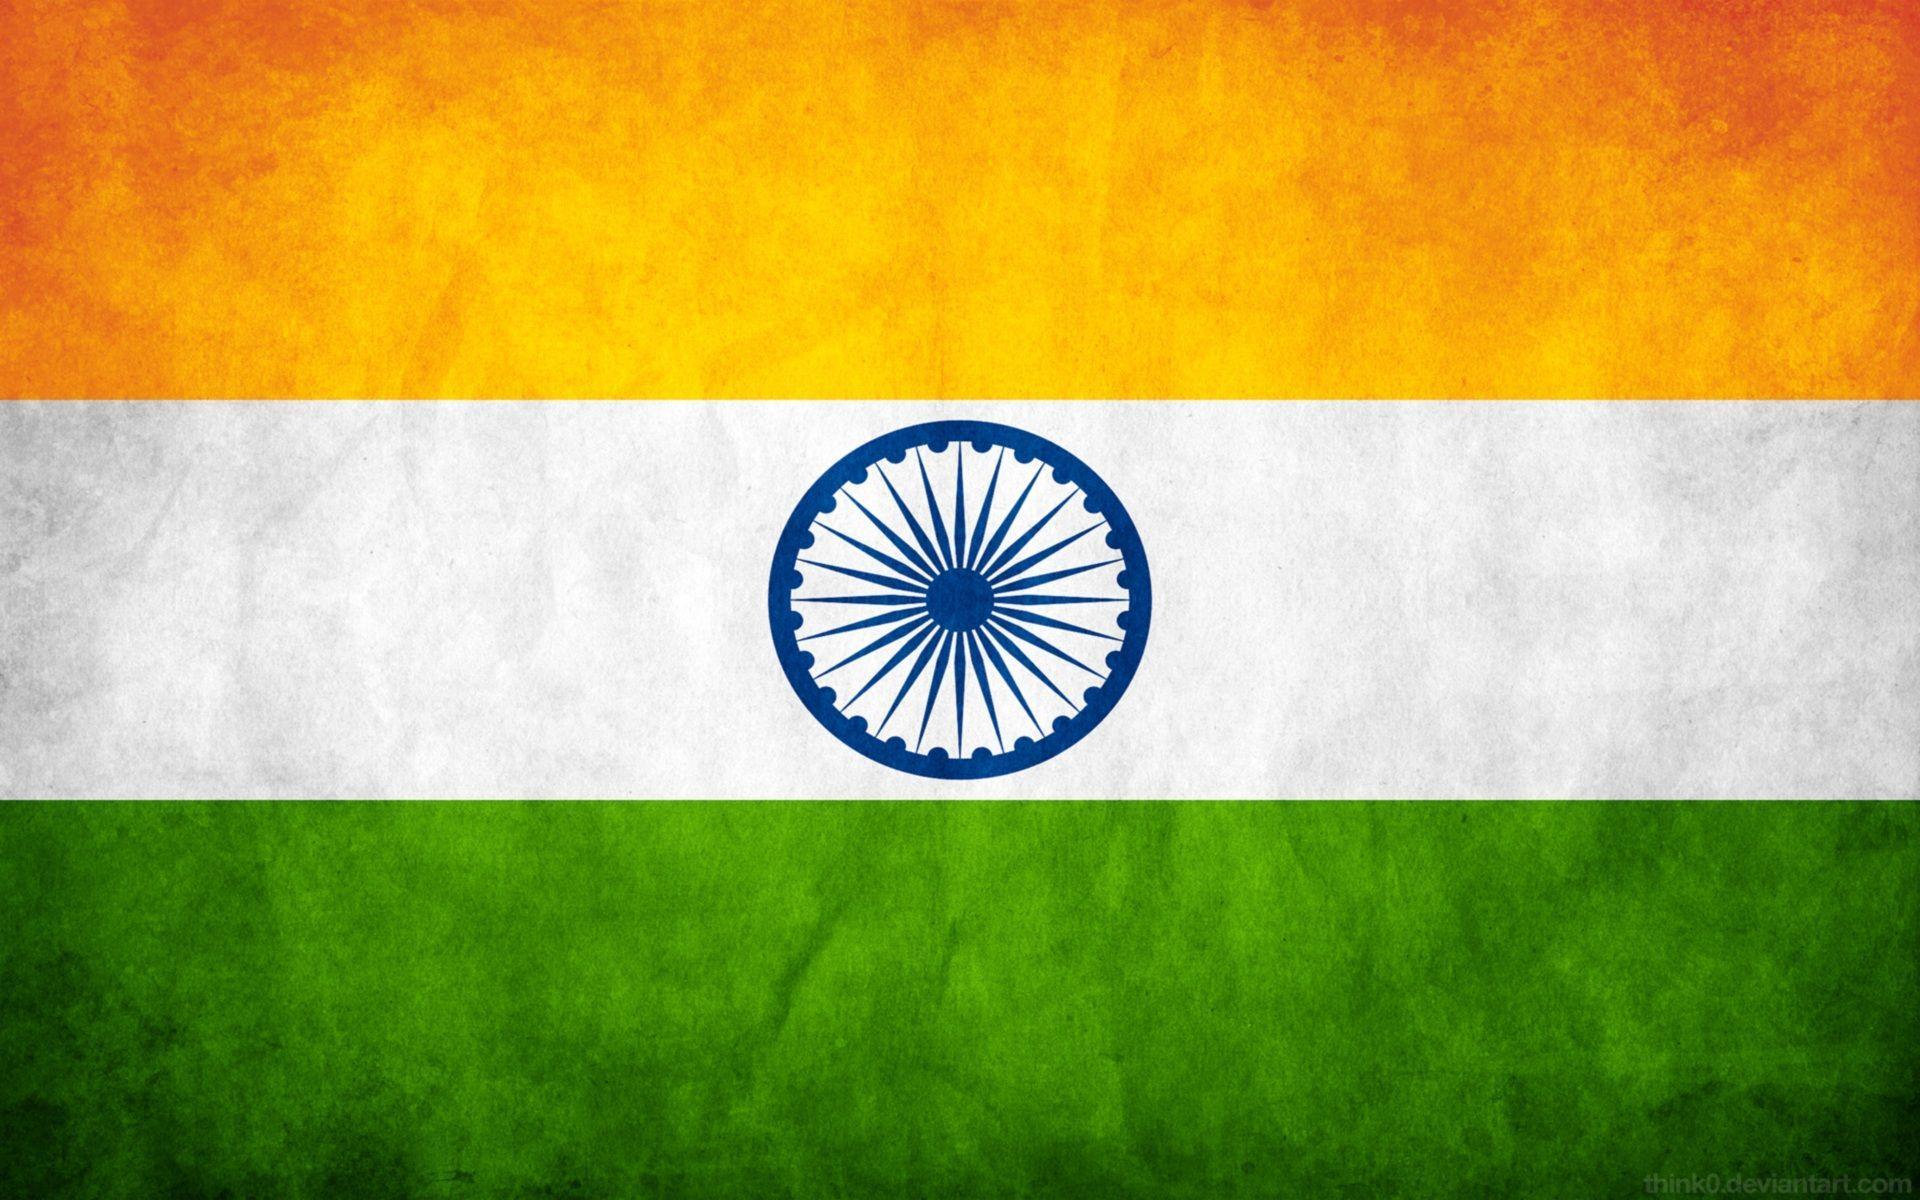 Indian Flag Wallpaper Image, Photo [Free Download]